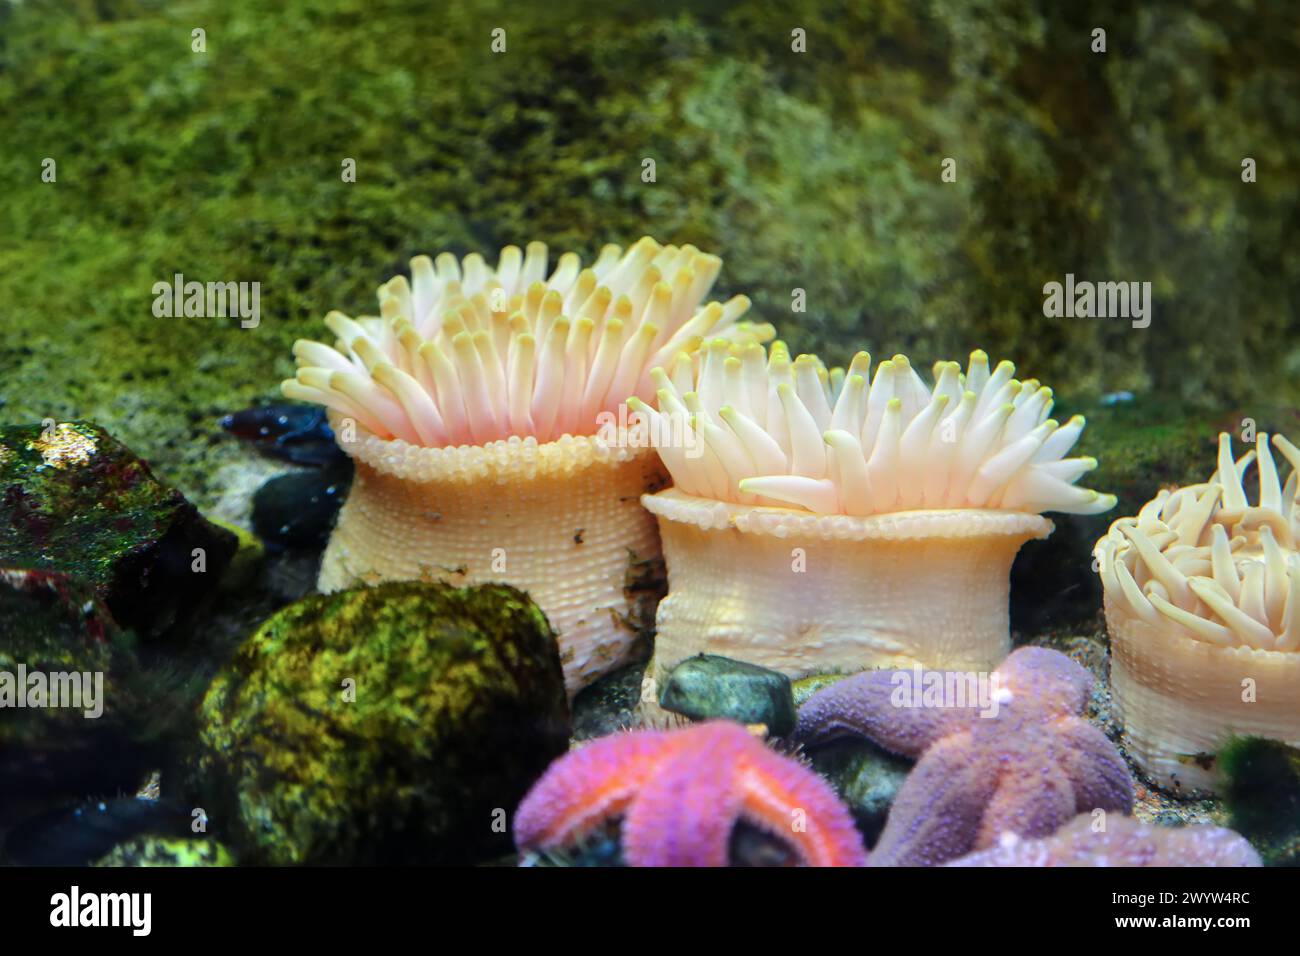 Seastars and anemones stuck to a rock in the ocean aquarium Stock Photo